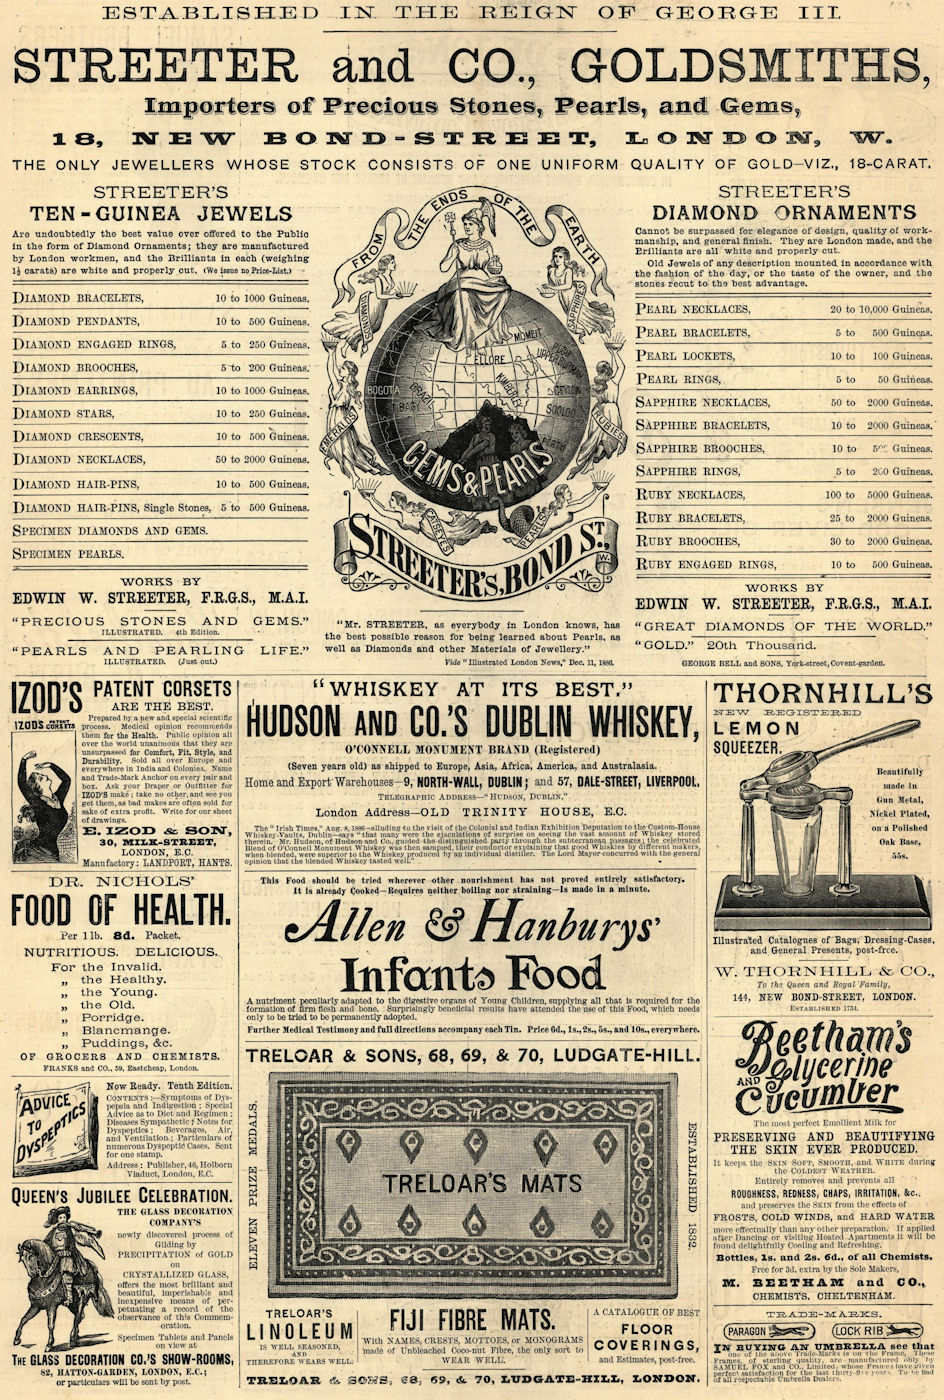 Streeter & Co. Goldsmiths. 18 Bond Street, London W. ADVERT 1887 ILN full page